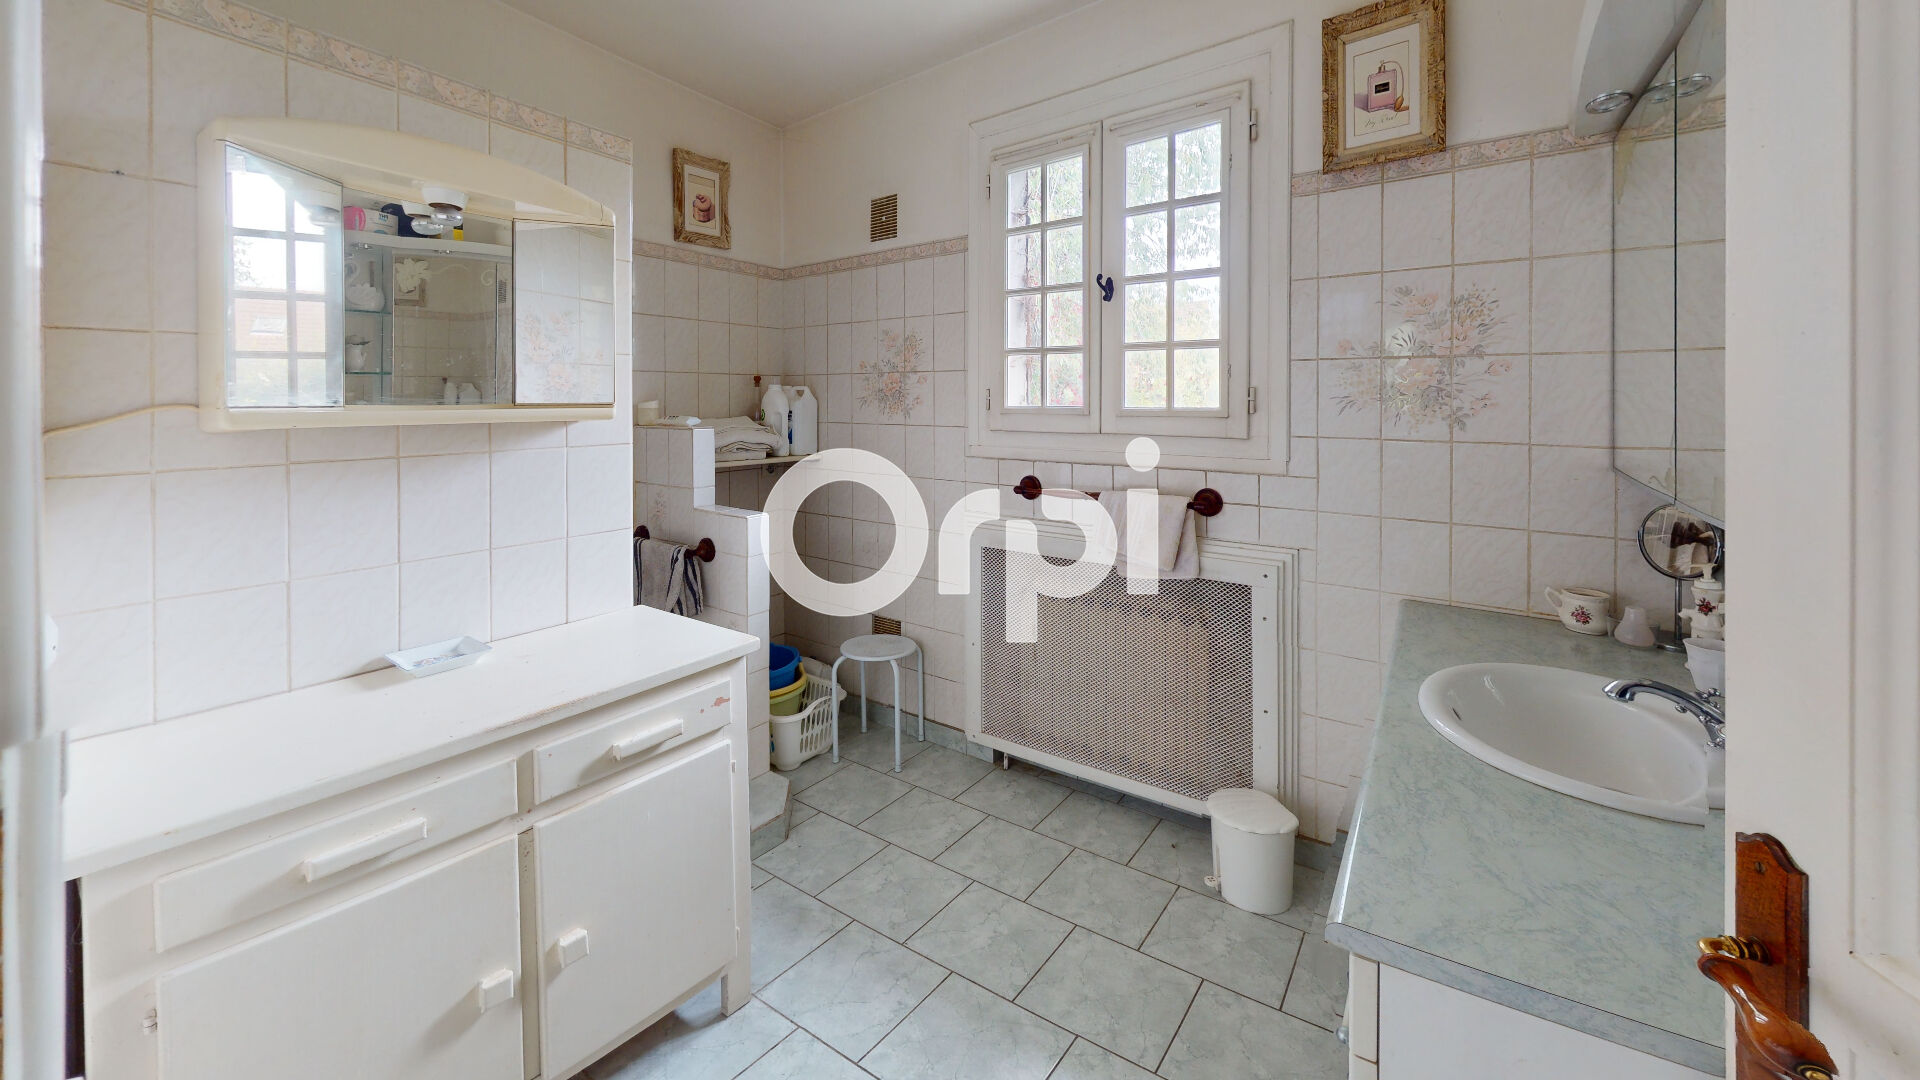 Maison a louer osny - 5 pièce(s) - 130 m2 - Surfyn